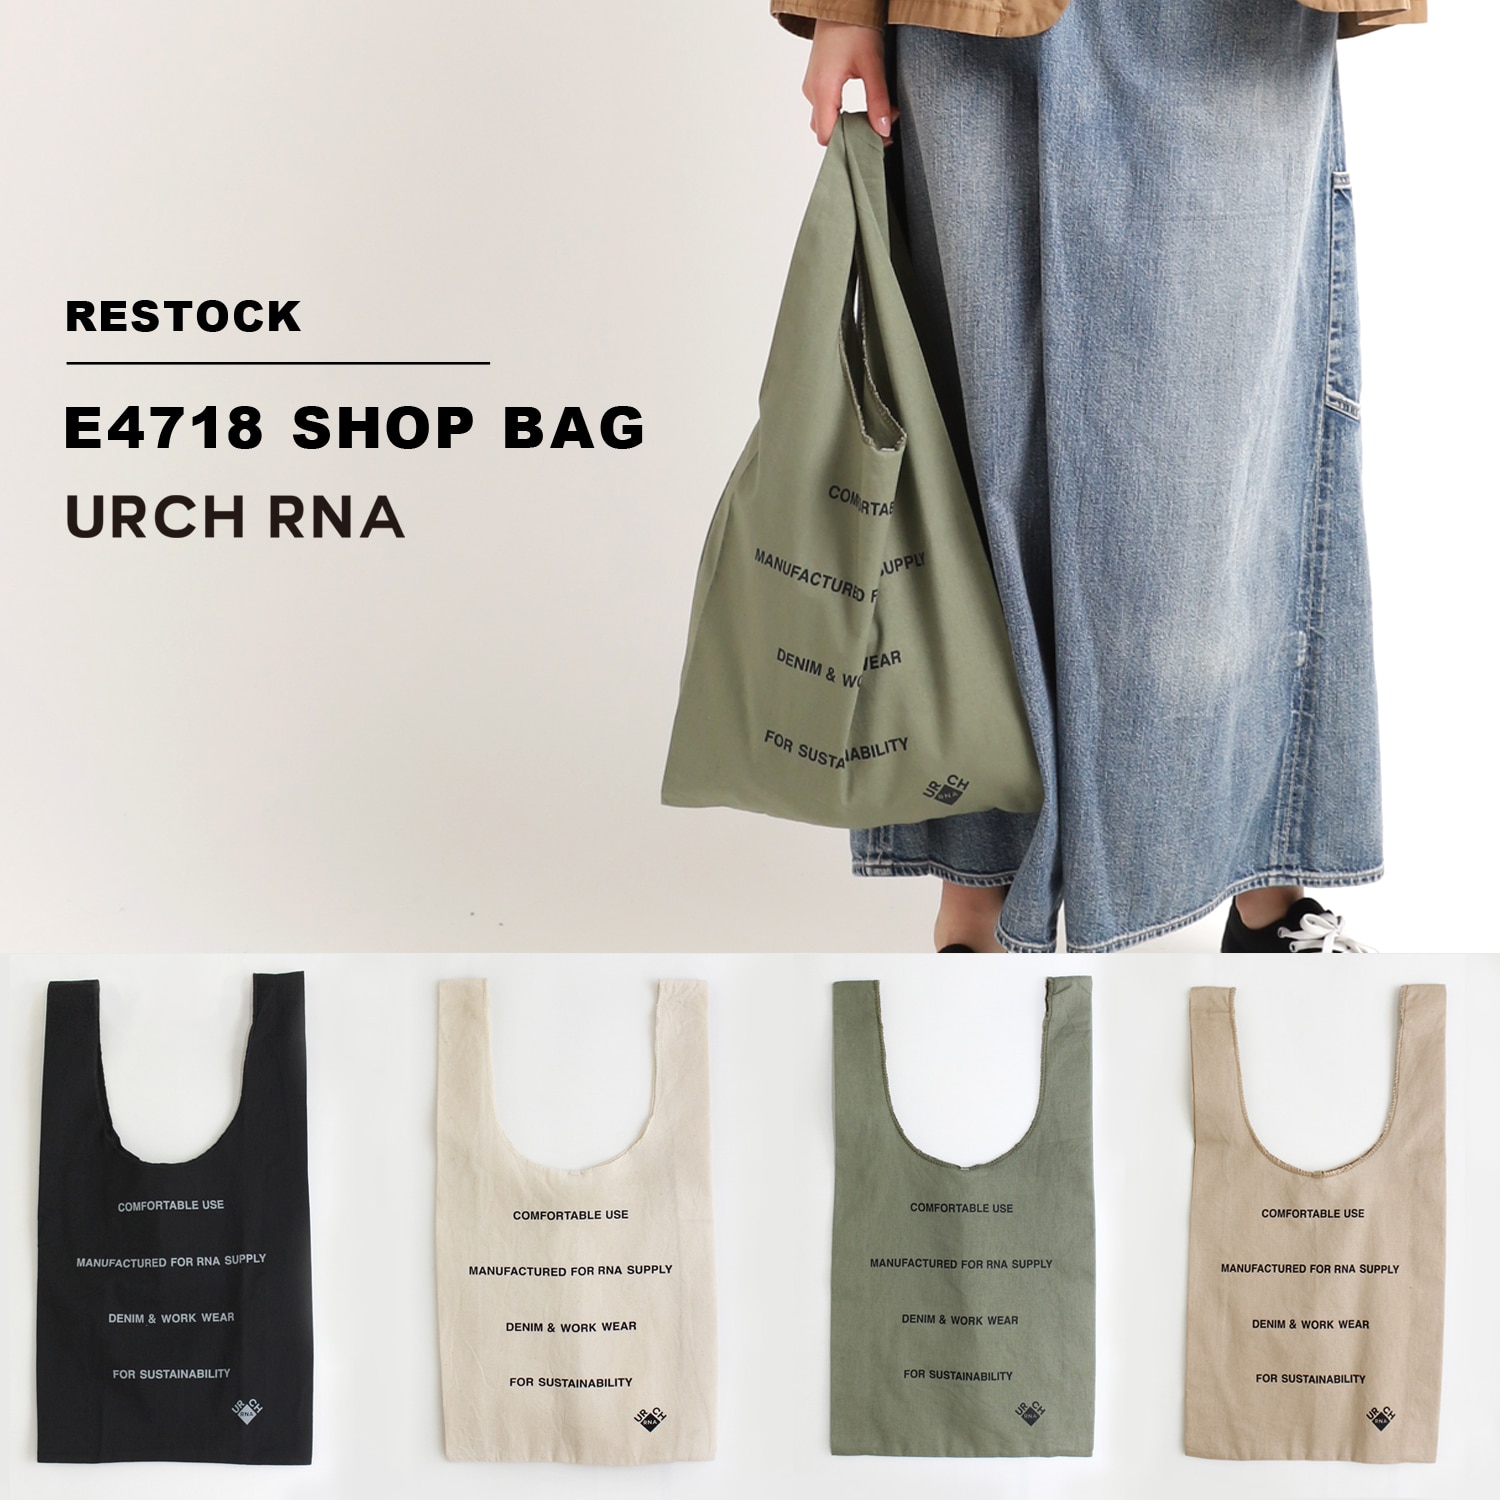 【URCH】大人気「URCHショップバッグ」が再入荷！